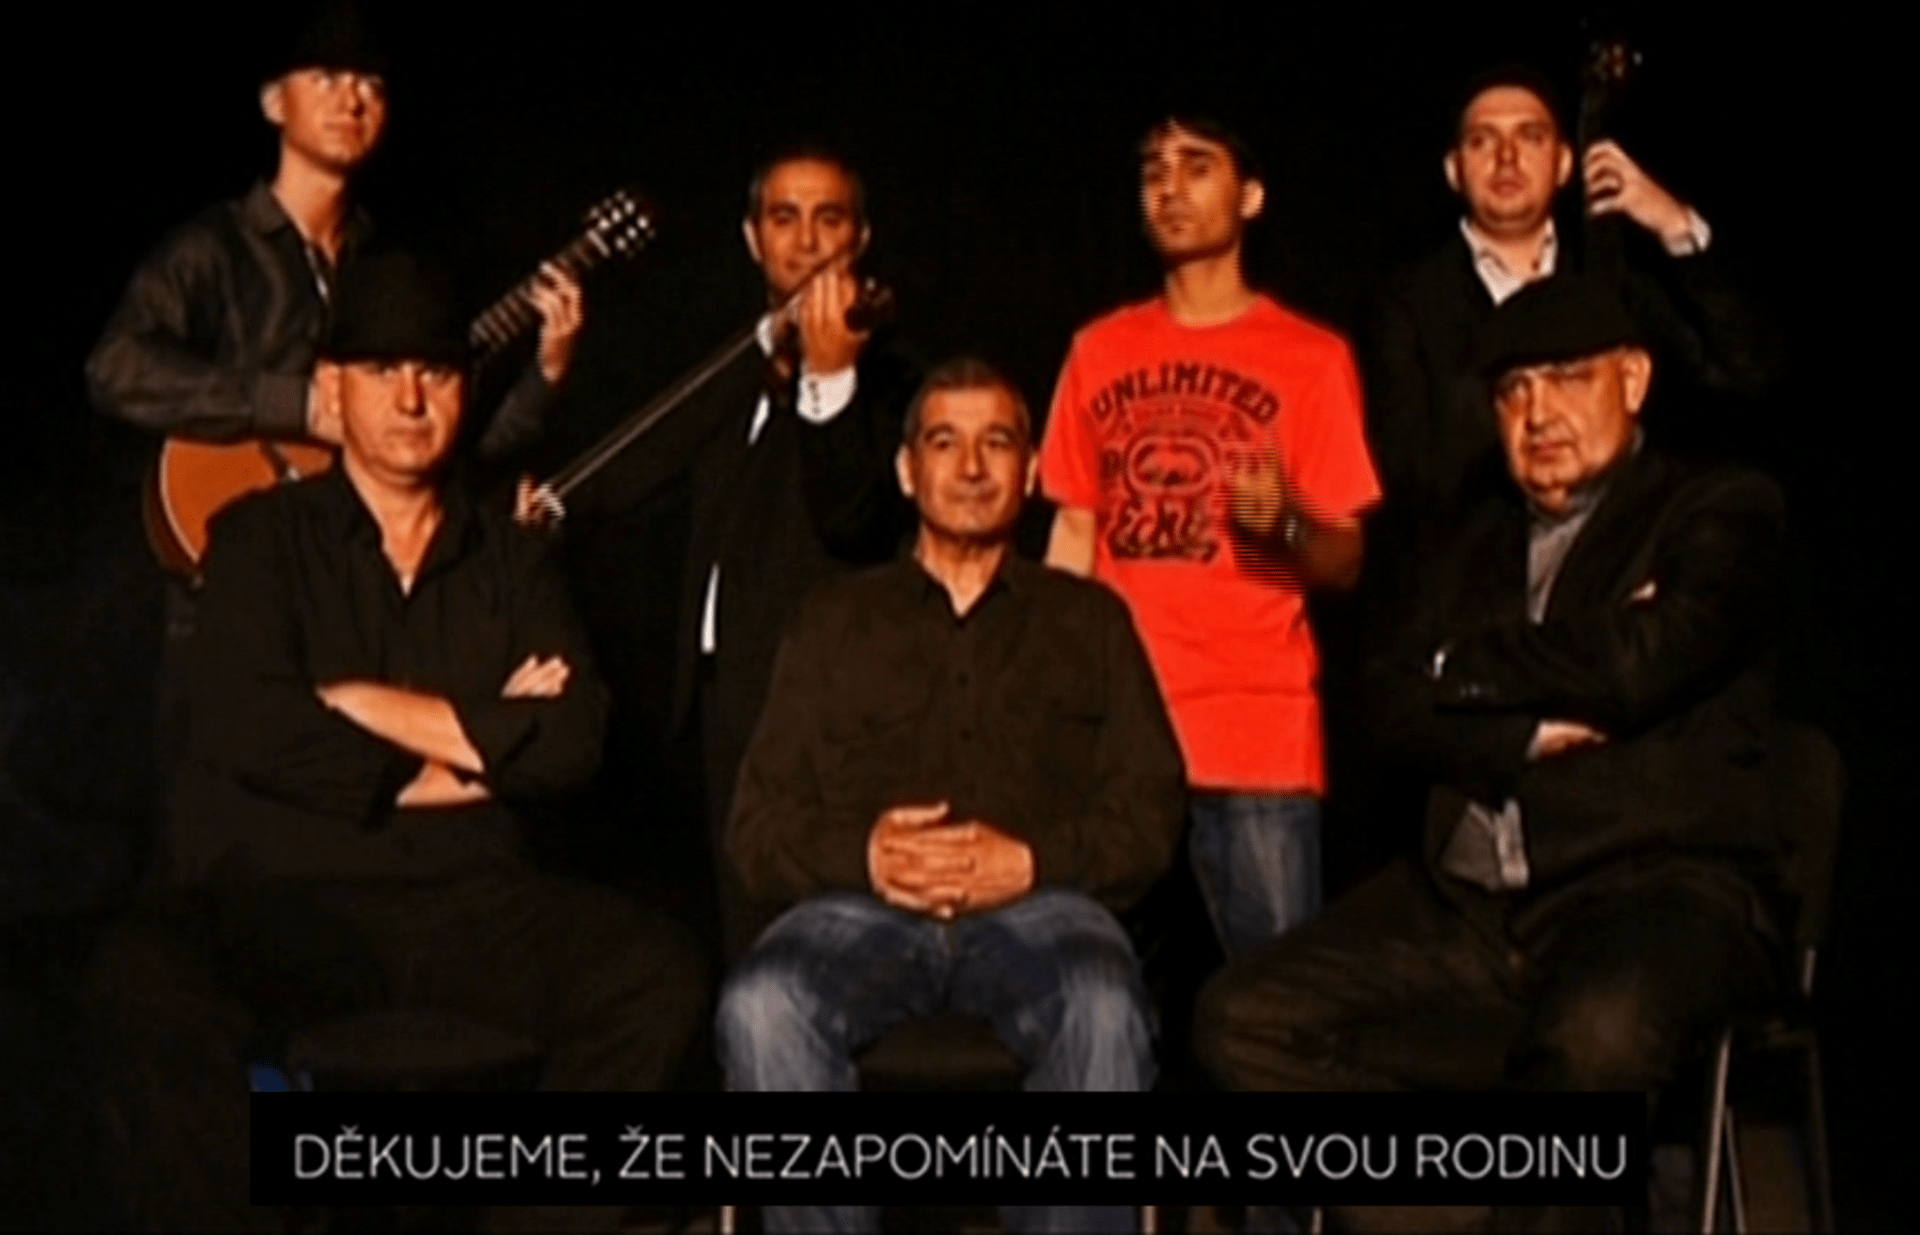 Video VIP zprávy: Gipsy.cz natočili nový videoklip, aby podpořili rodinné vztahy